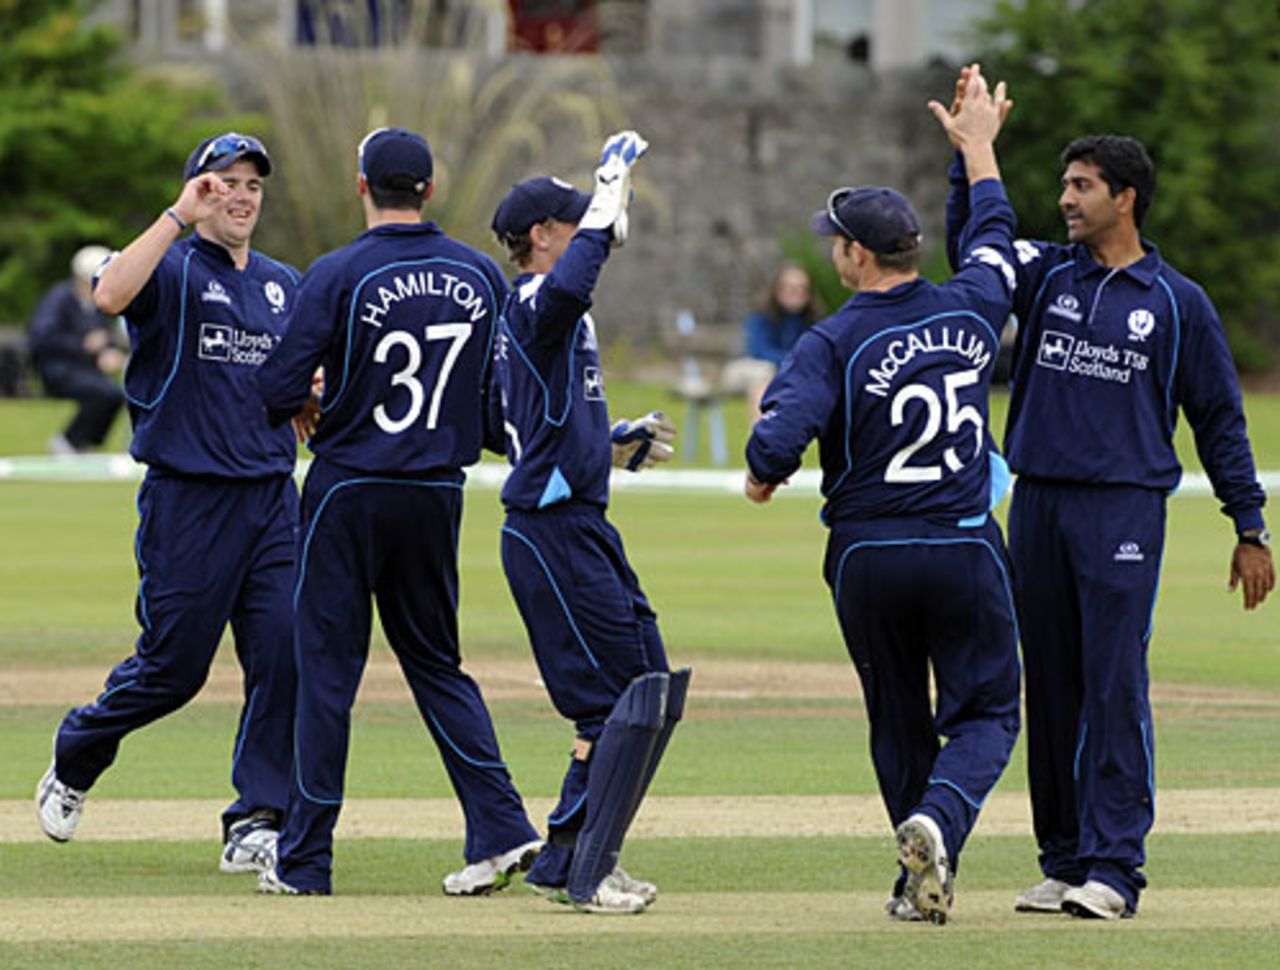 Scotland celebrate a wicket by Majid Haq, Scotland v Ireland, 1st ODI, Aberdeen, August 22, 2009